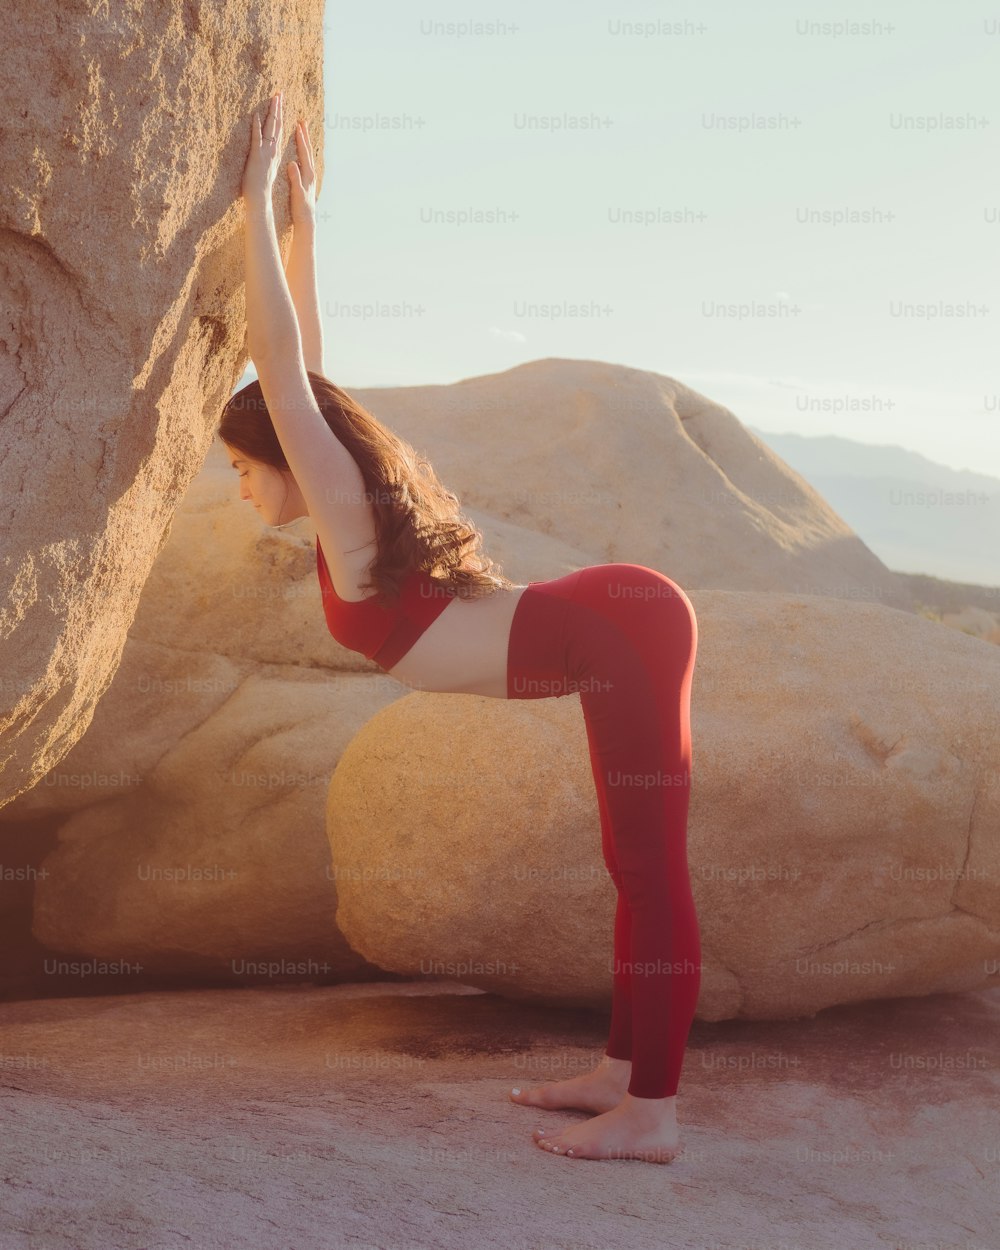 1K+ Yoga Girl Pictures  Download Free Images on Unsplash